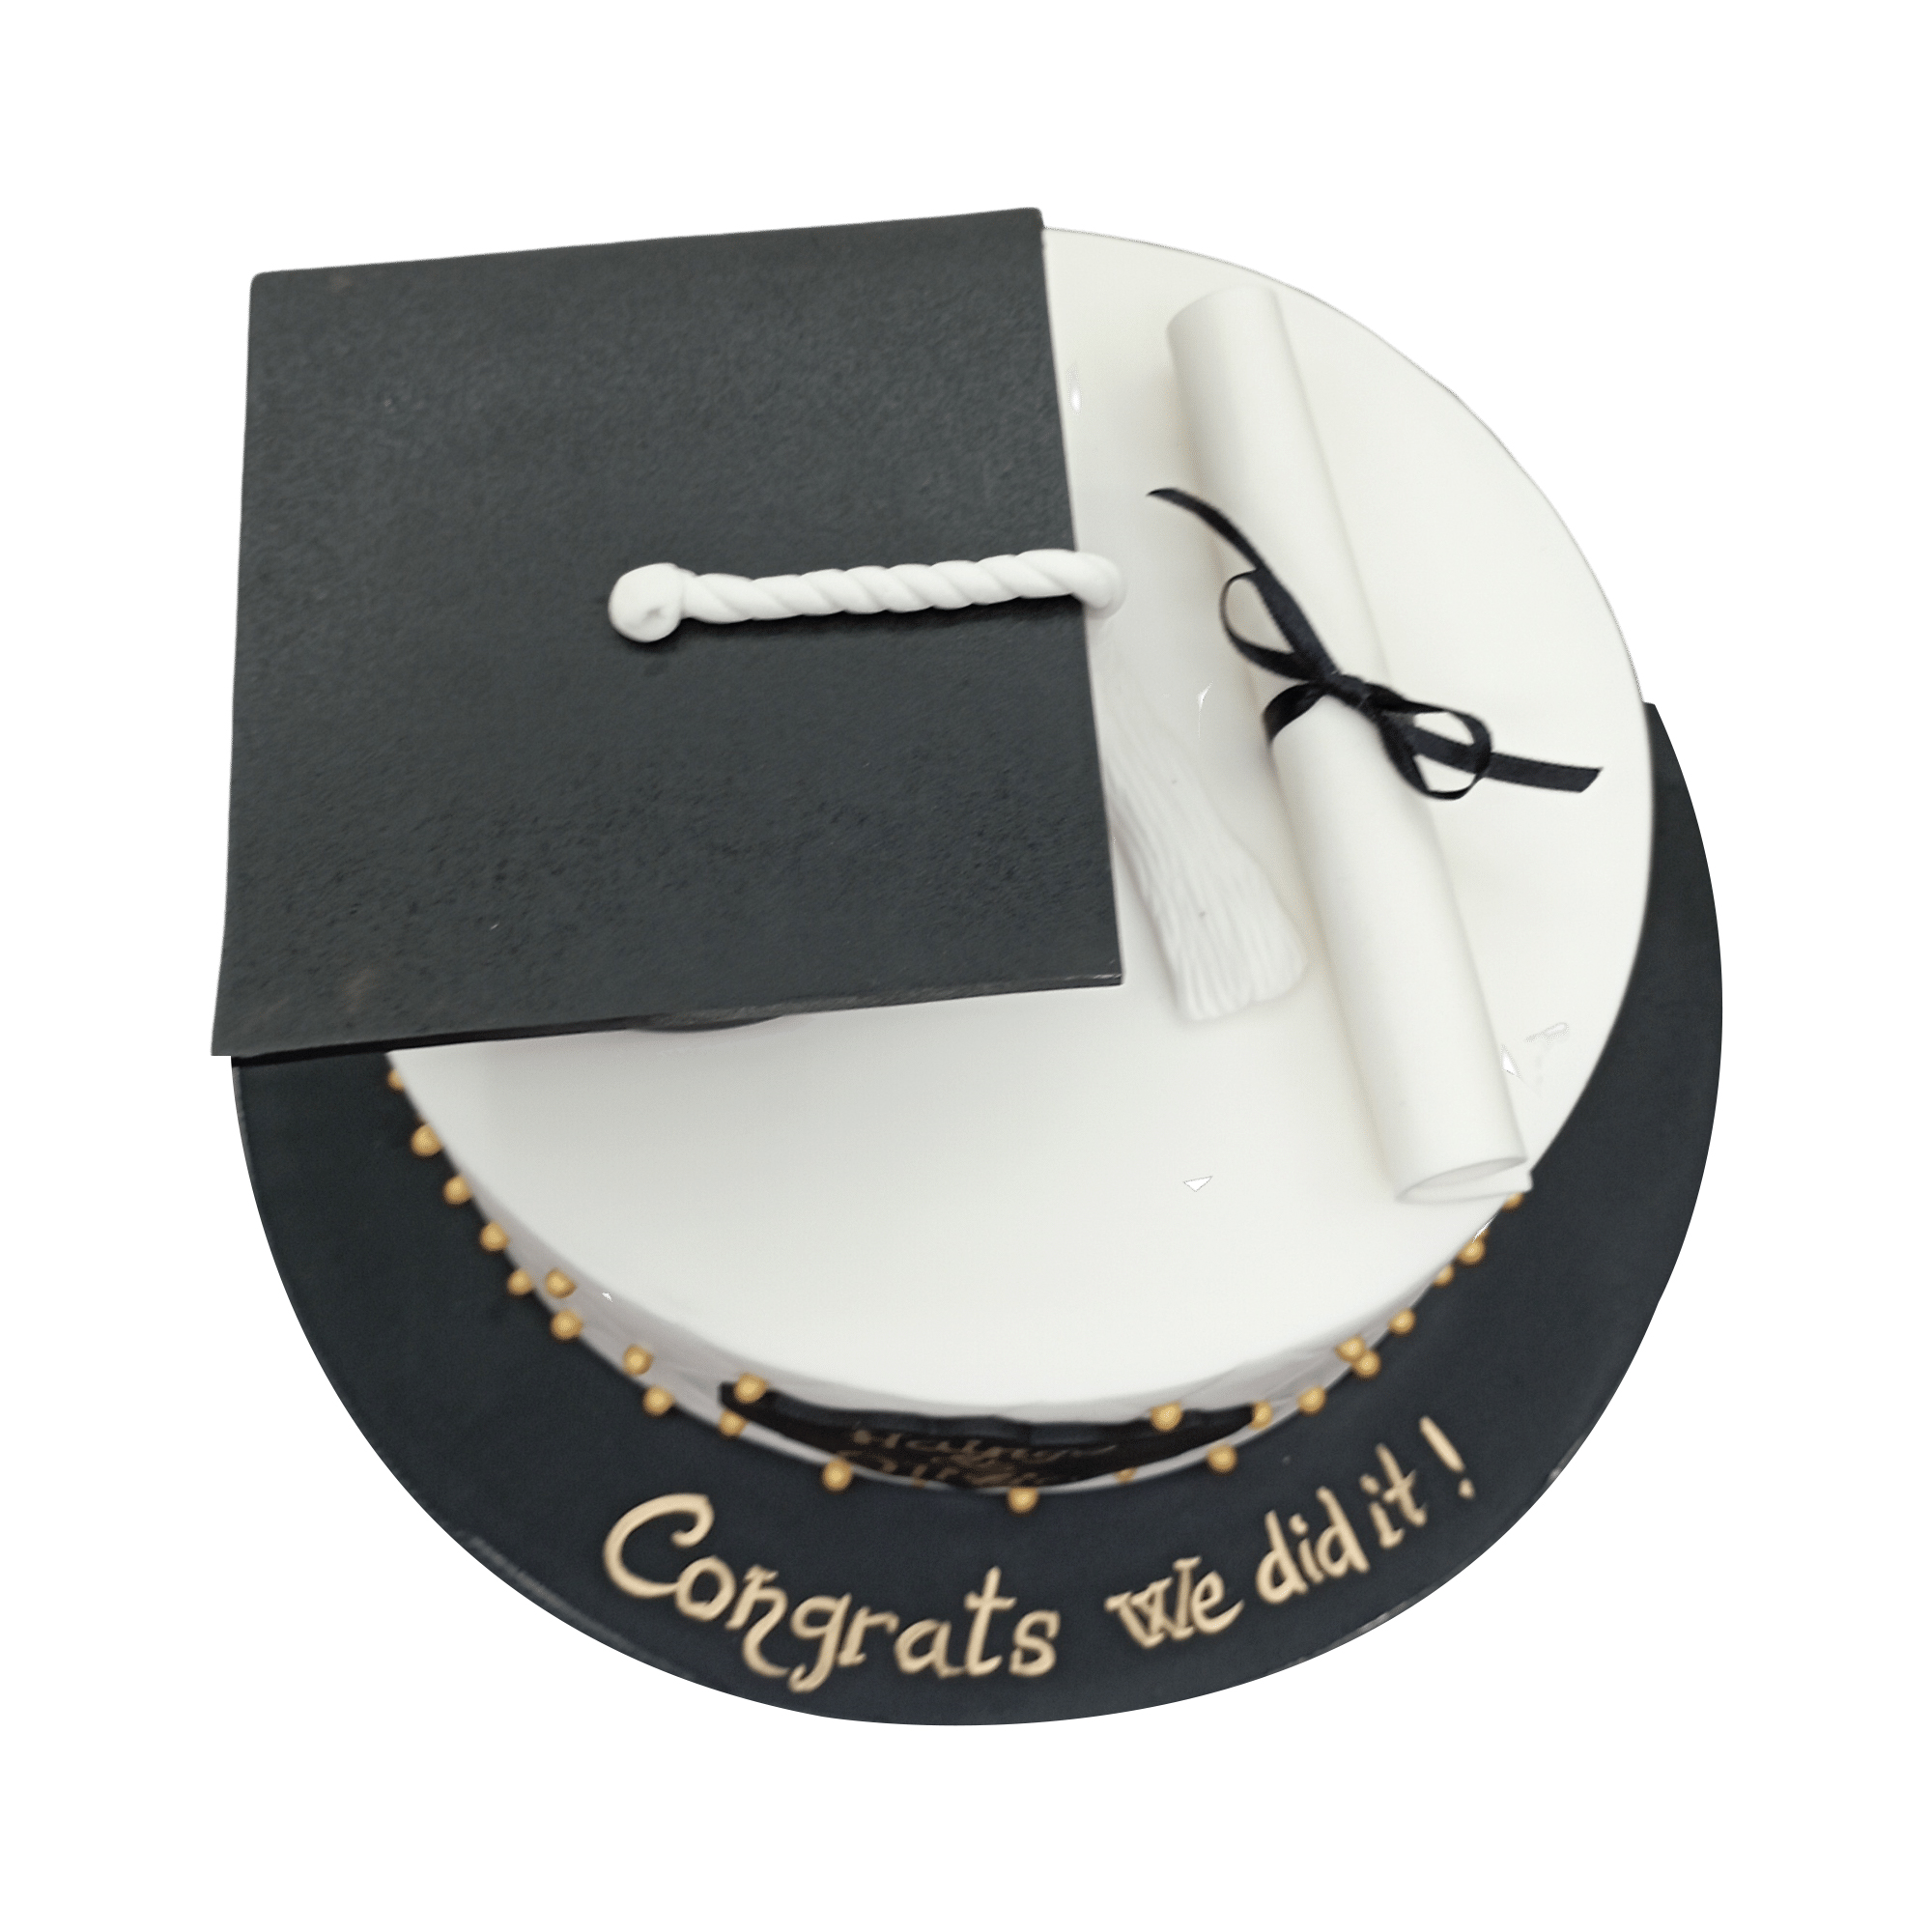 Graduation Themed Cake